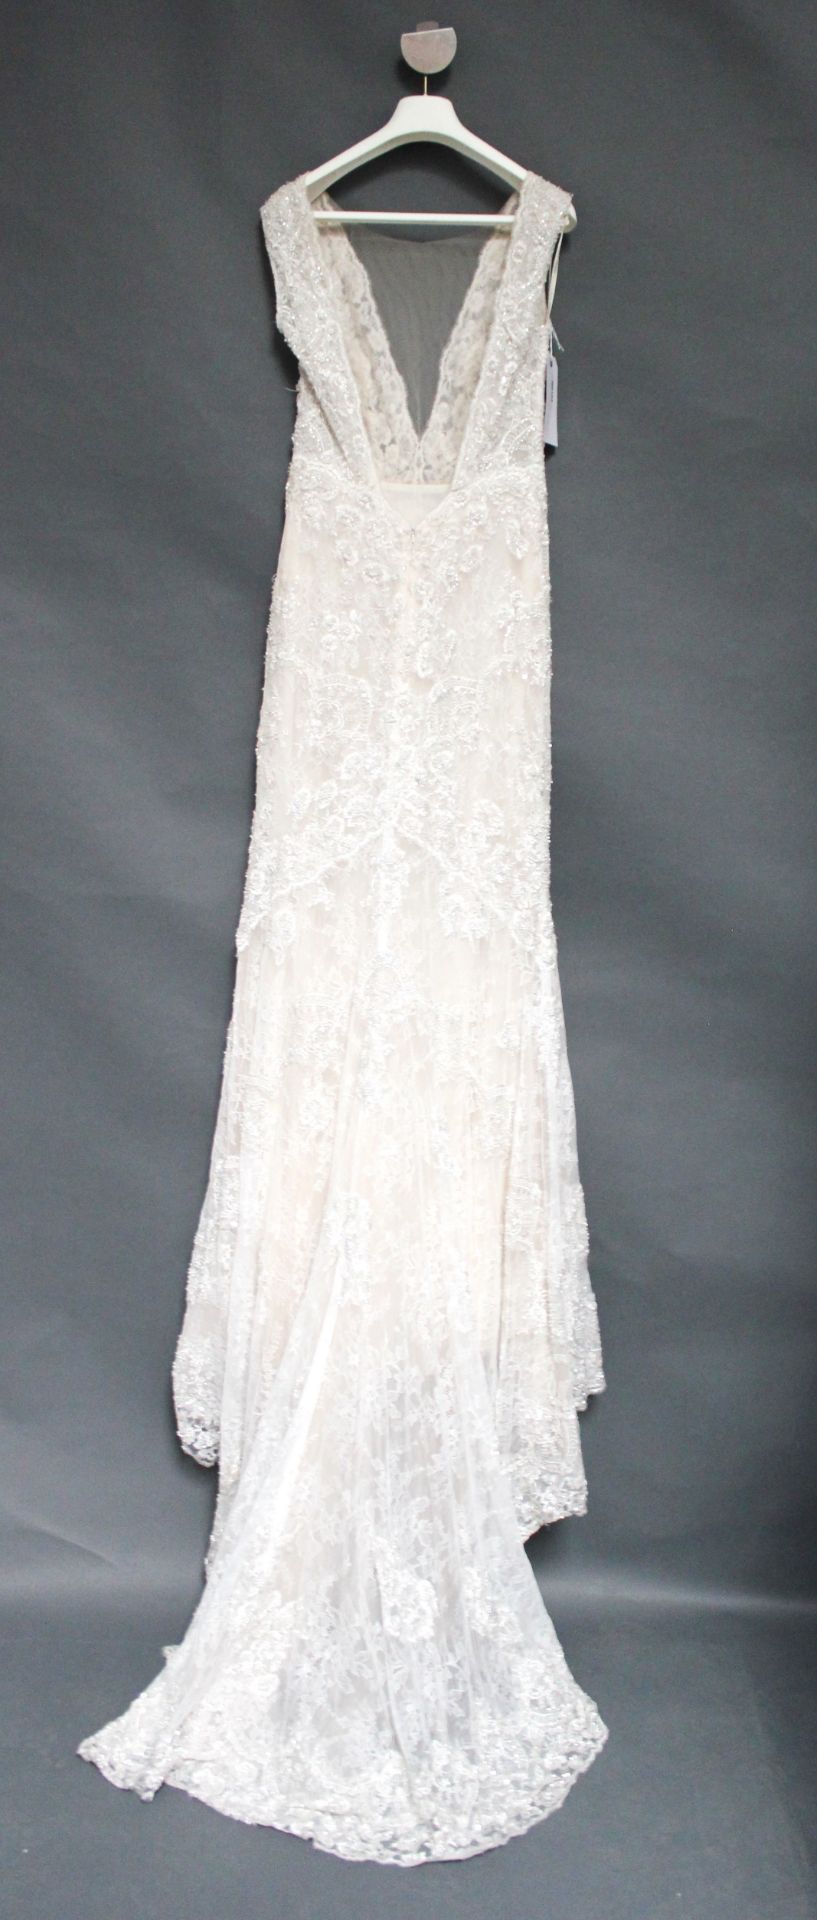 1 x REBECCA INGRAM 'Gabriella' Sleeveless Lace And Beaded Designer Wedding Dress RRP £1,400 UK12 - Image 4 of 6